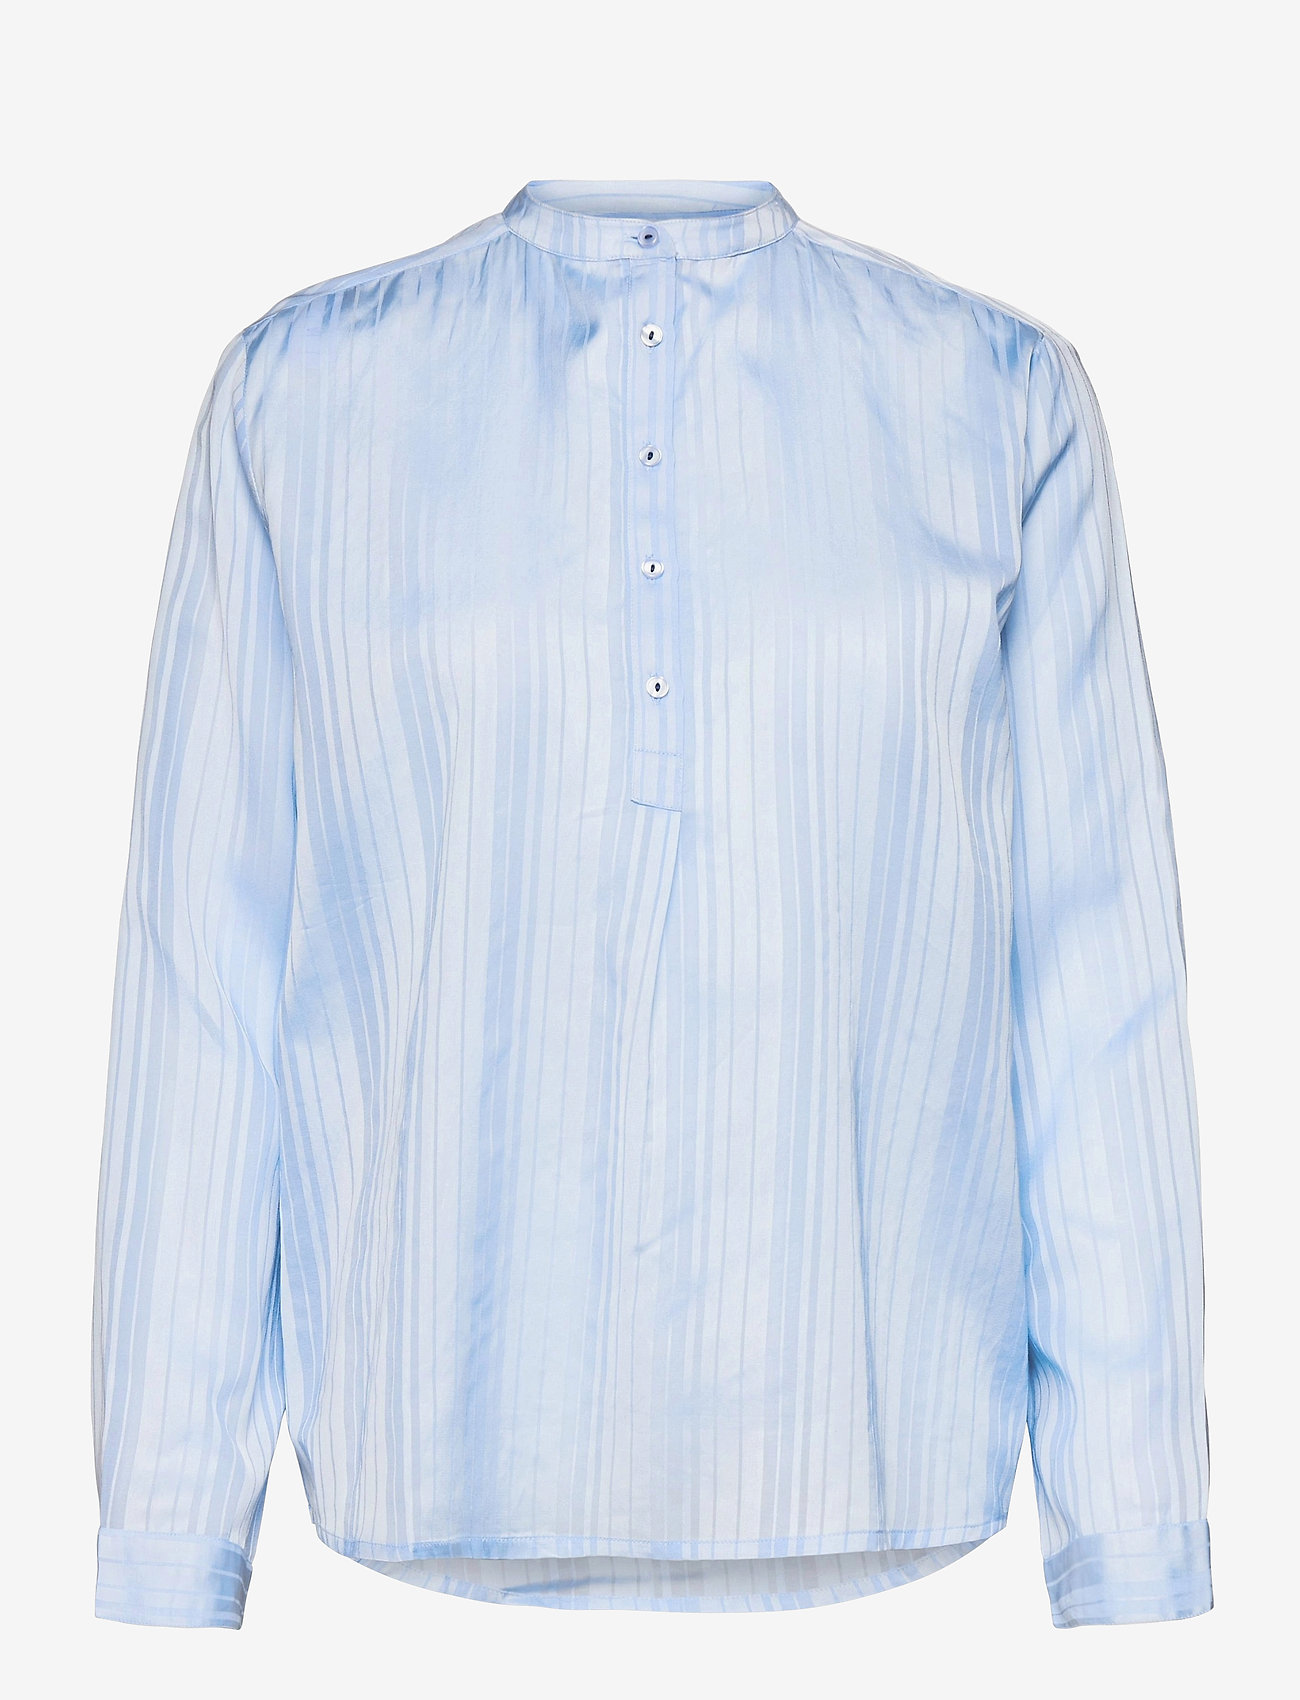 Lollys Laundry - Lux Shirt - langærmede bluser - light blue - 0